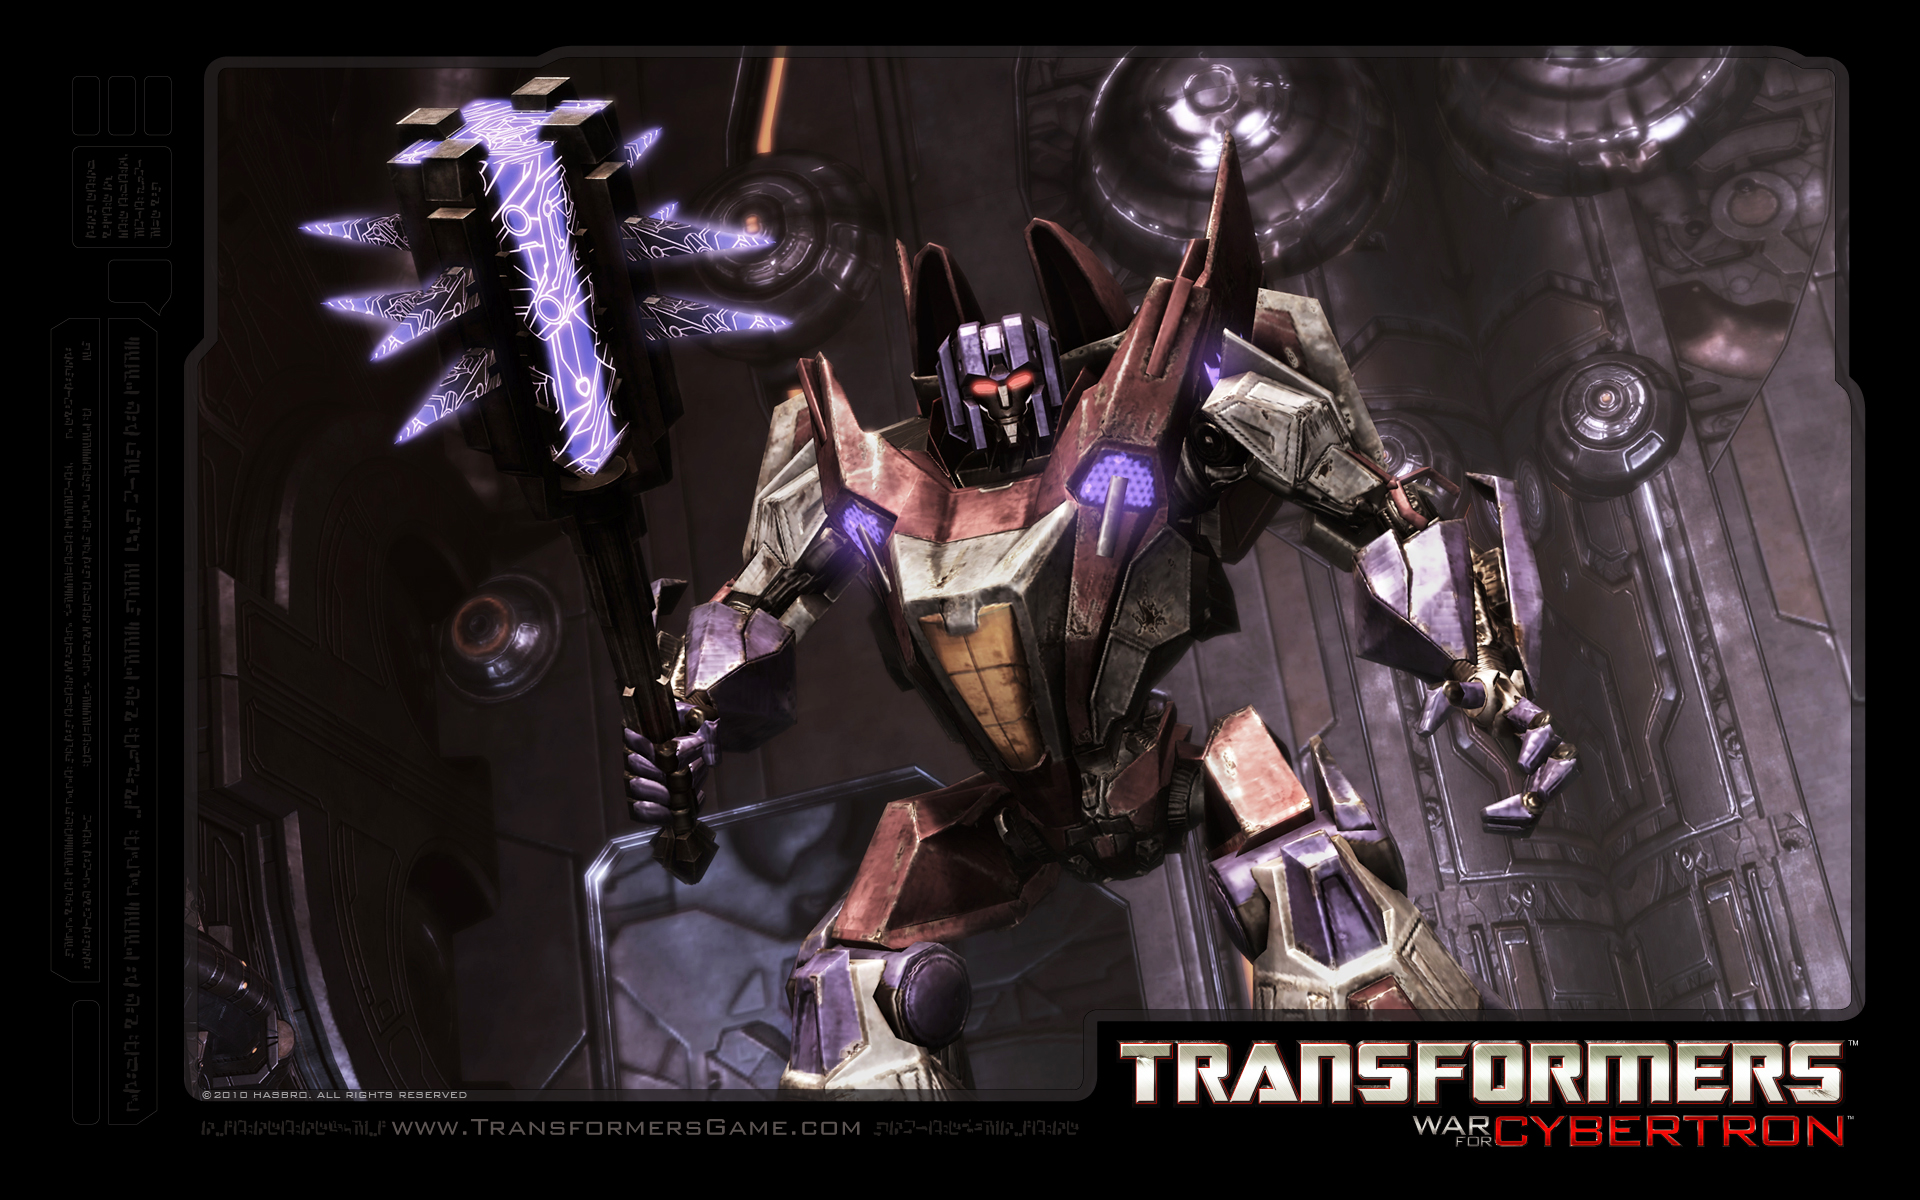 Transformers: War for Cybertron - Wallpaper Gallery